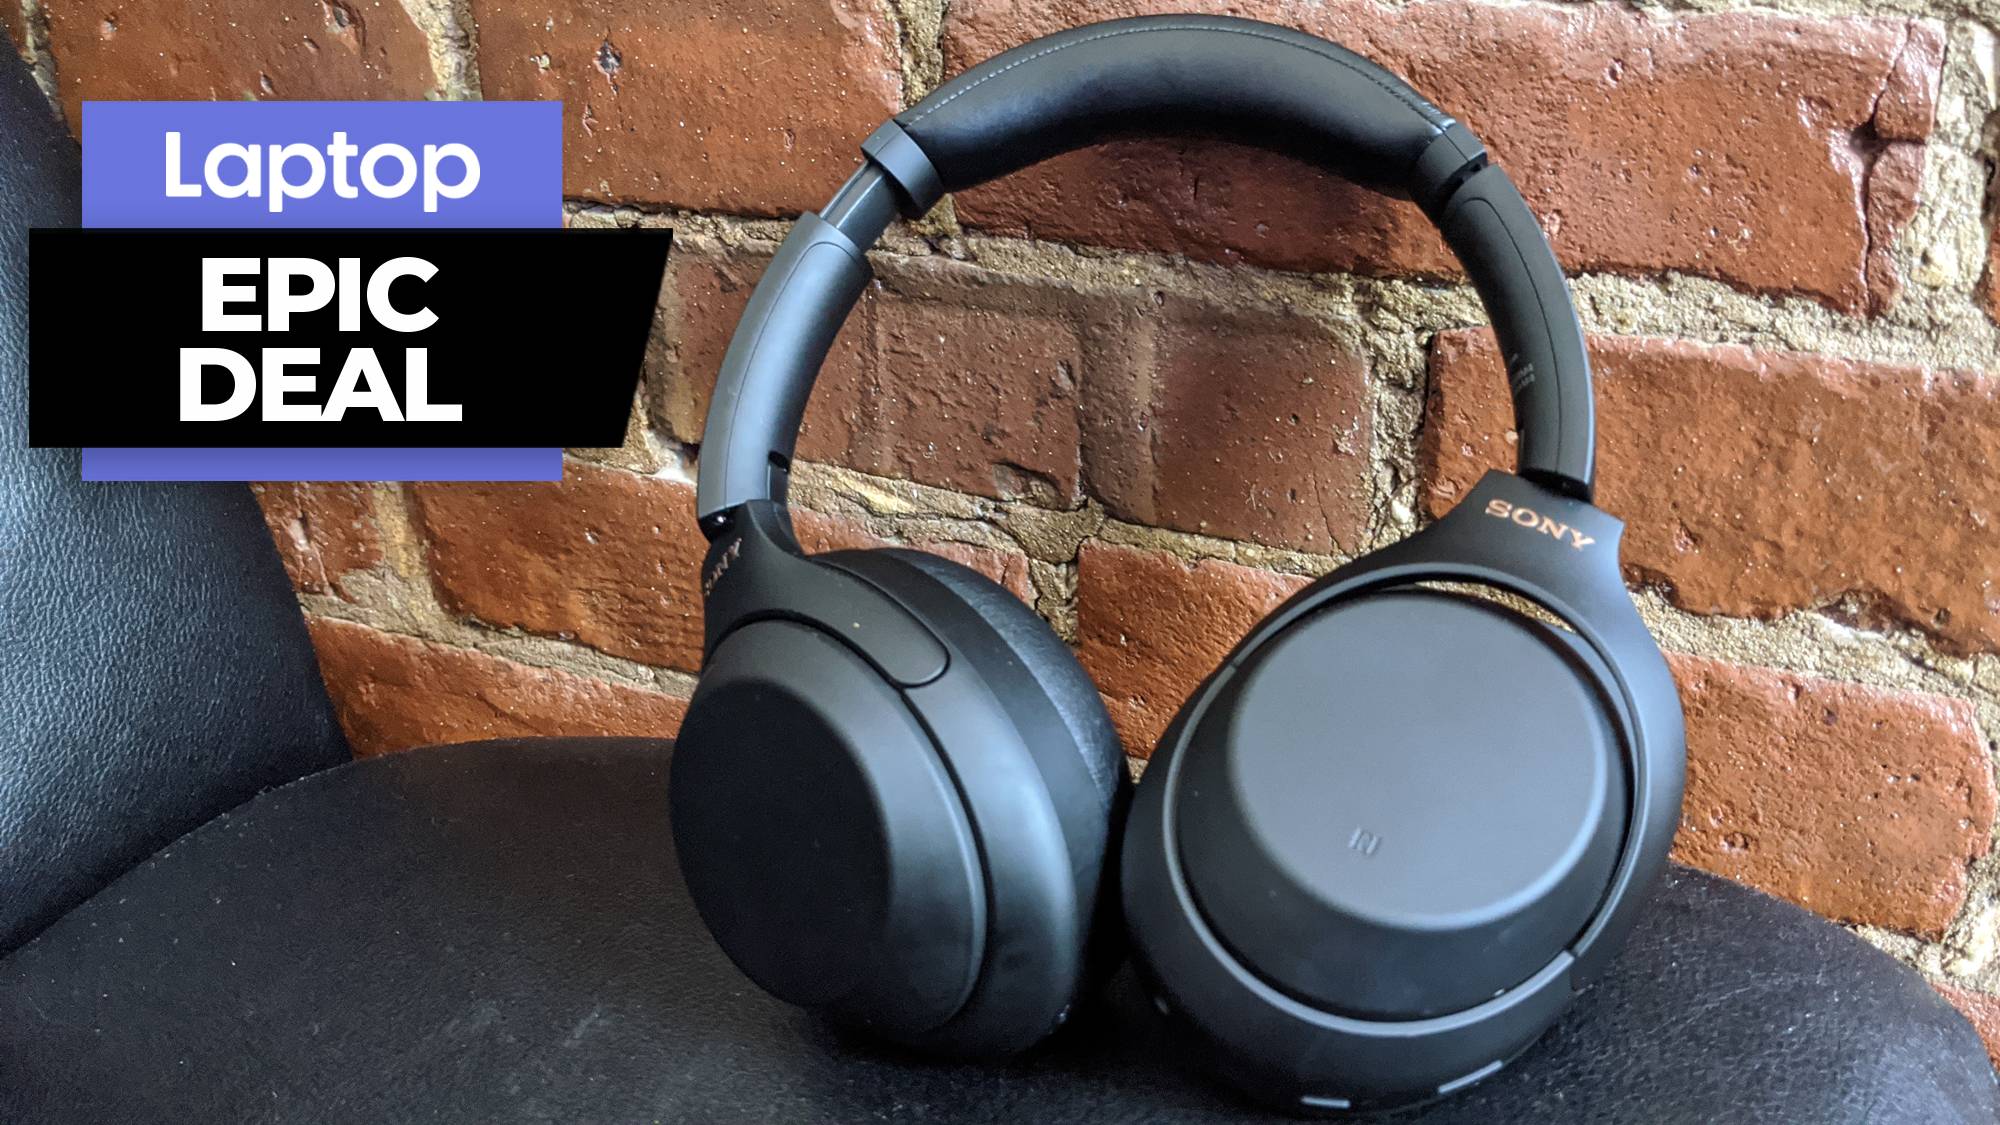 Sony WH-1000XM4 headphones return to stellar deal price of $278